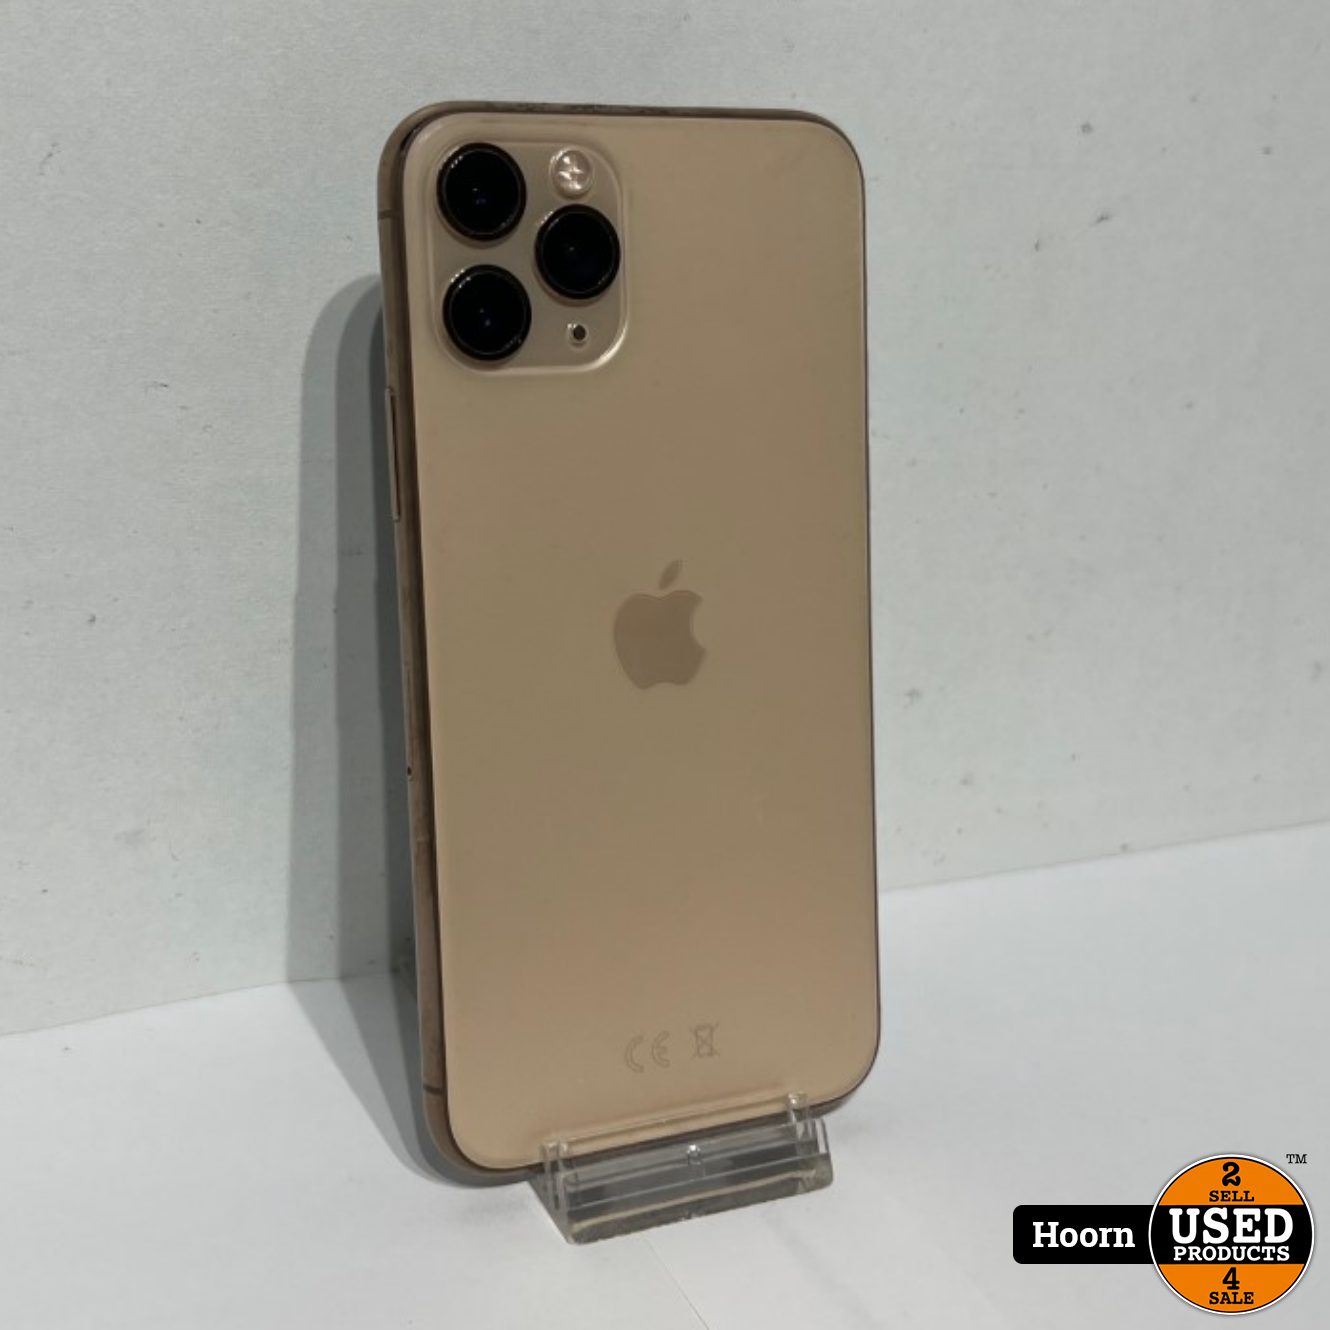 vice versa vegetarisch Schuldenaar Apple iPhone iPhone 11 Pro 64GB Gold Los Toestel Accu: 85% - Used Products  Hoorn